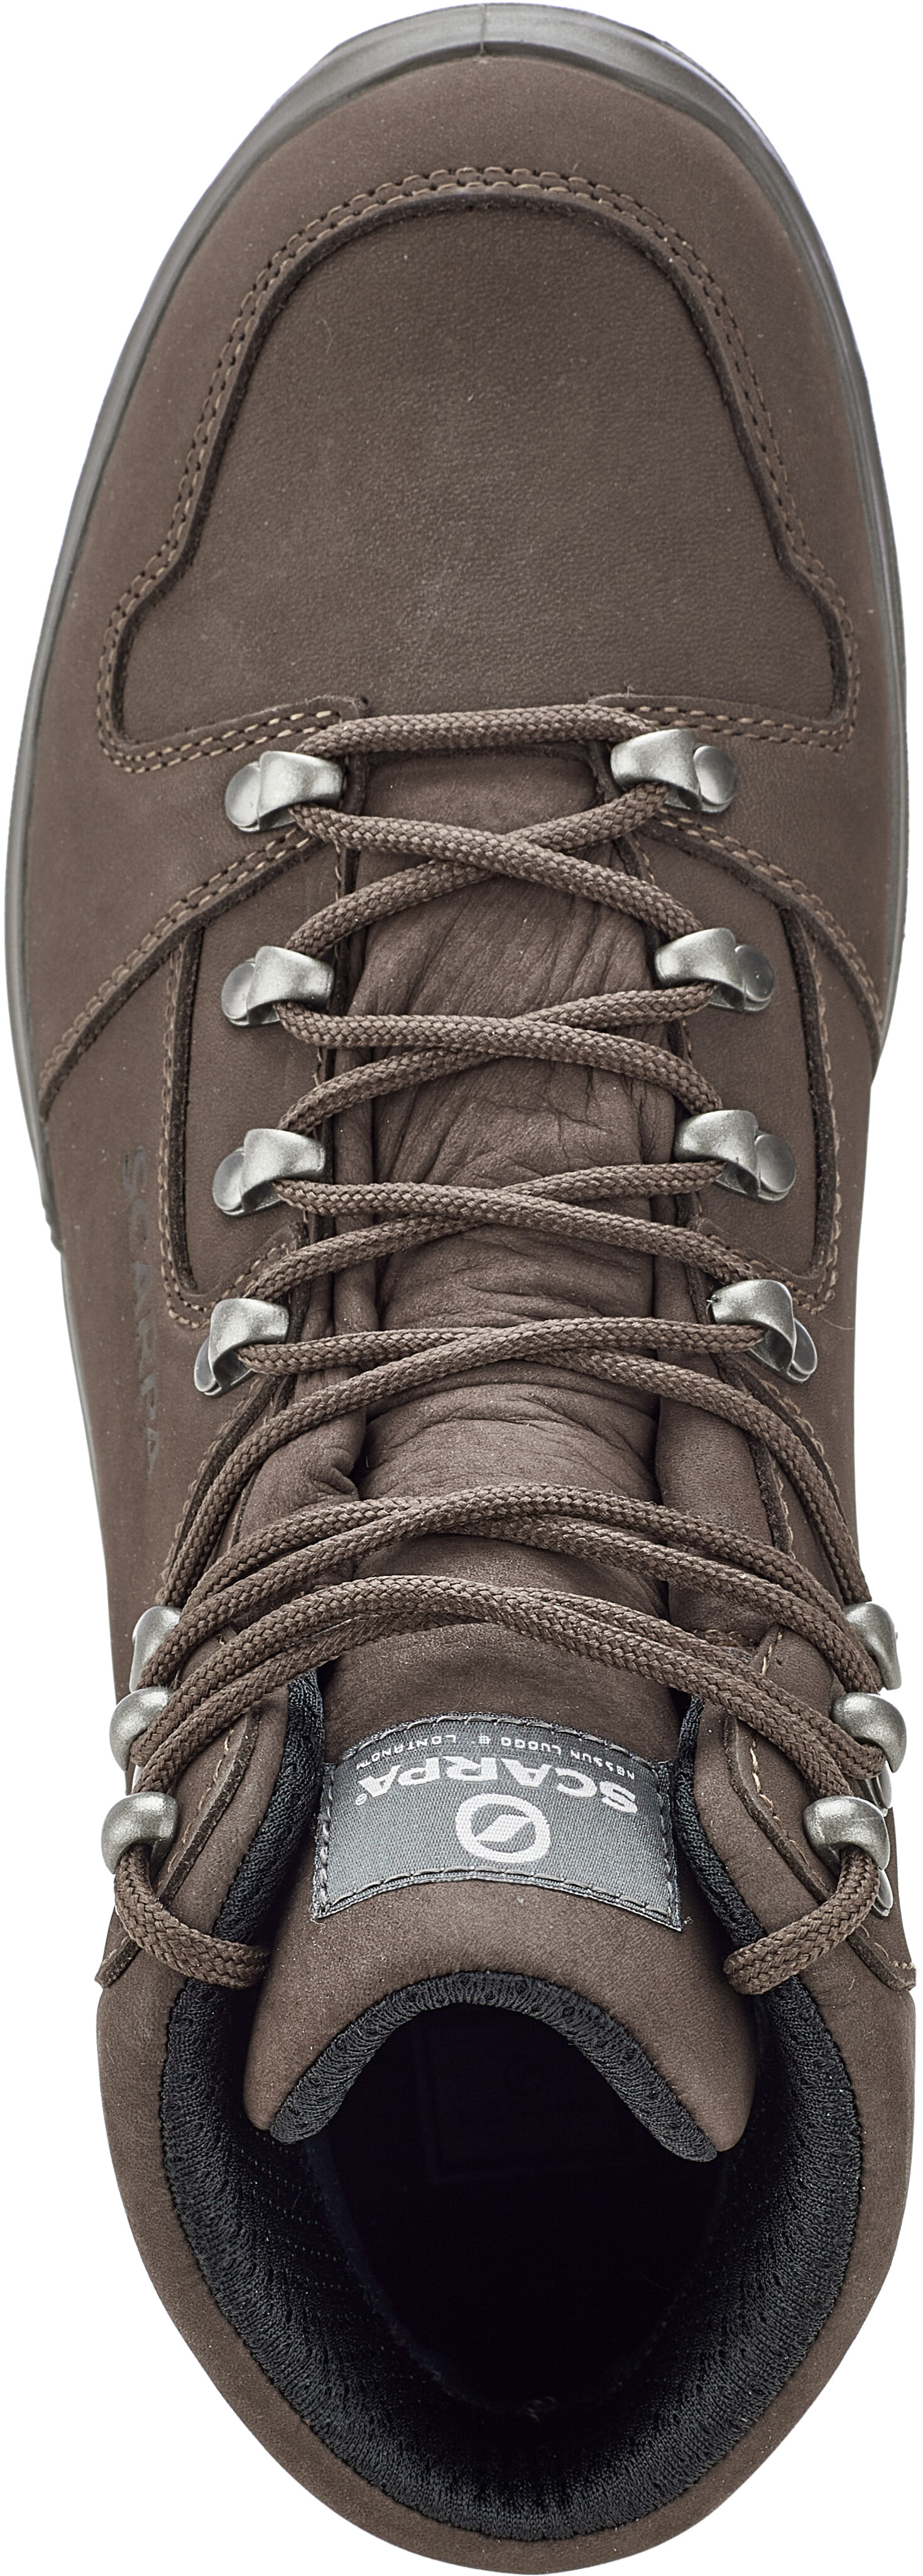 Scarpa Tellus GTX Boots brown | Addnature.co.uk